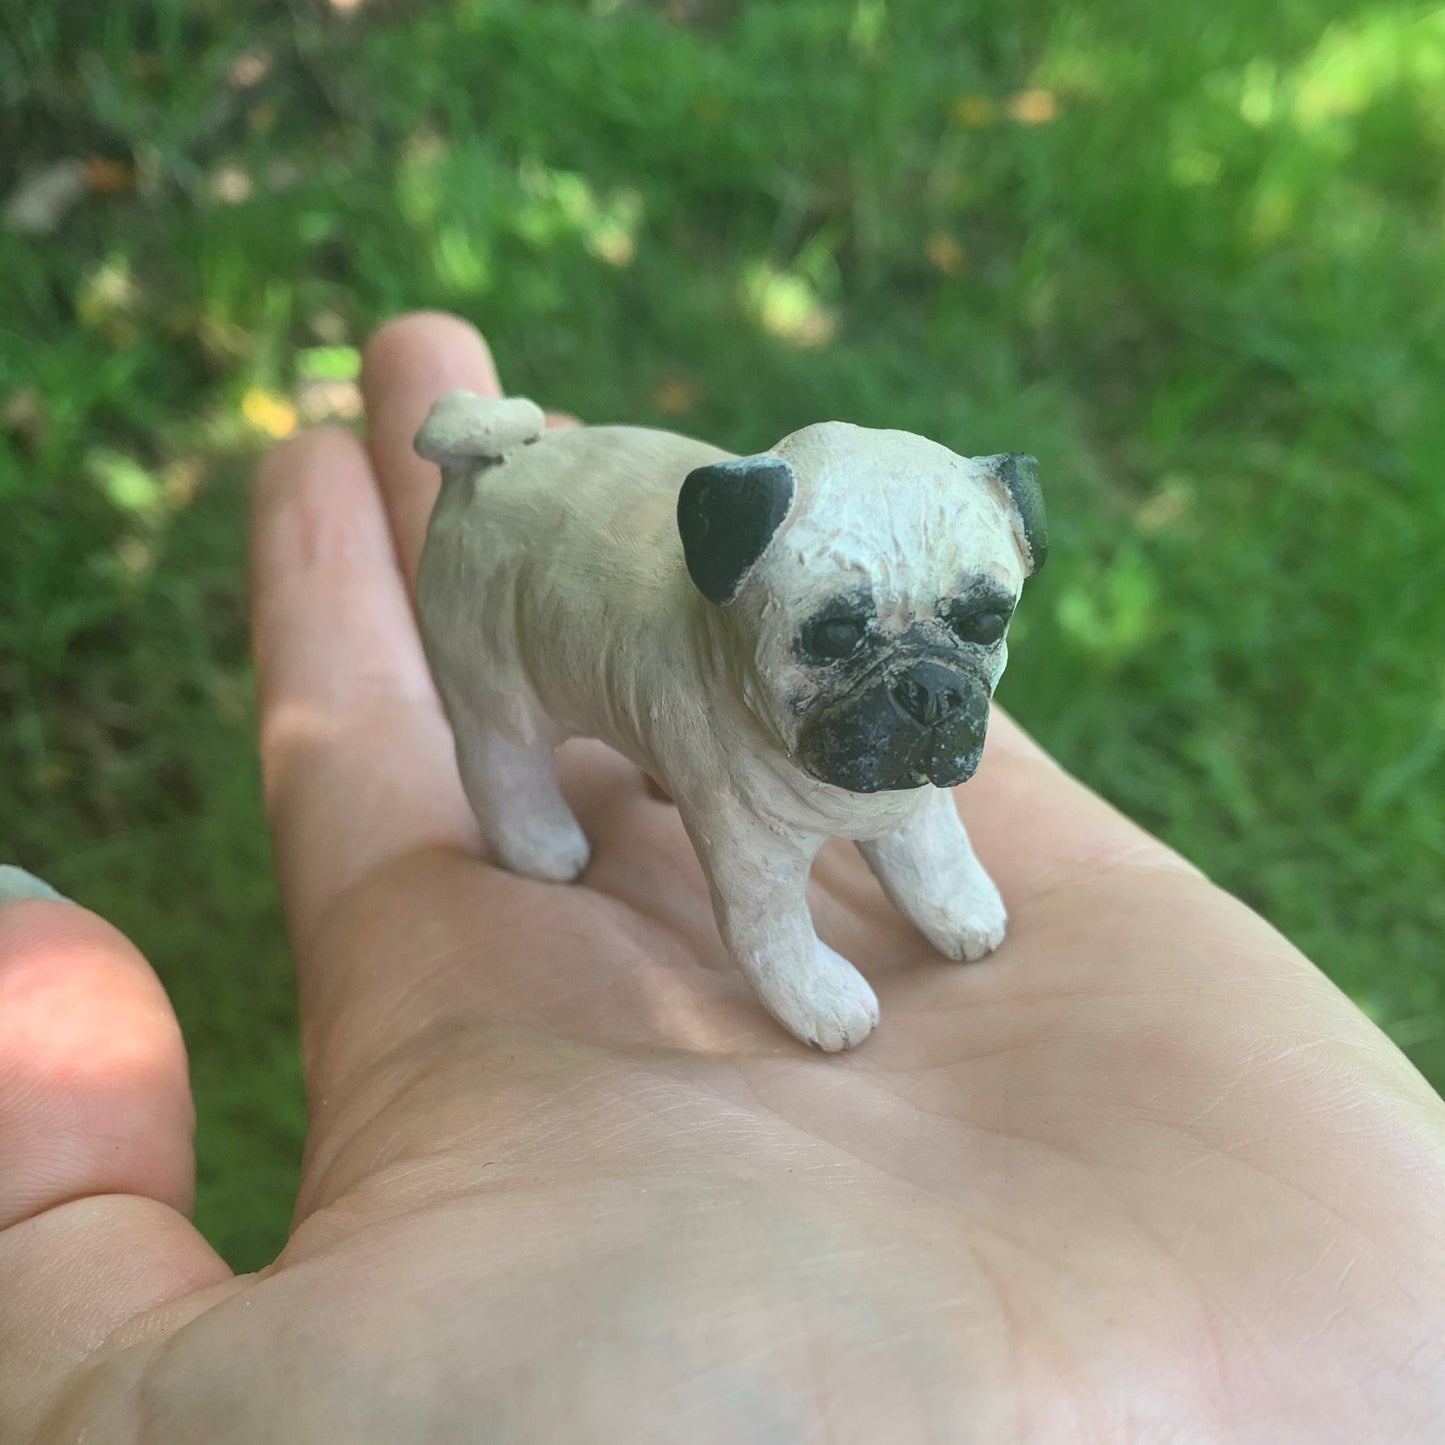 Handmade polymer clay mini pug dog figurine standing on a hand.